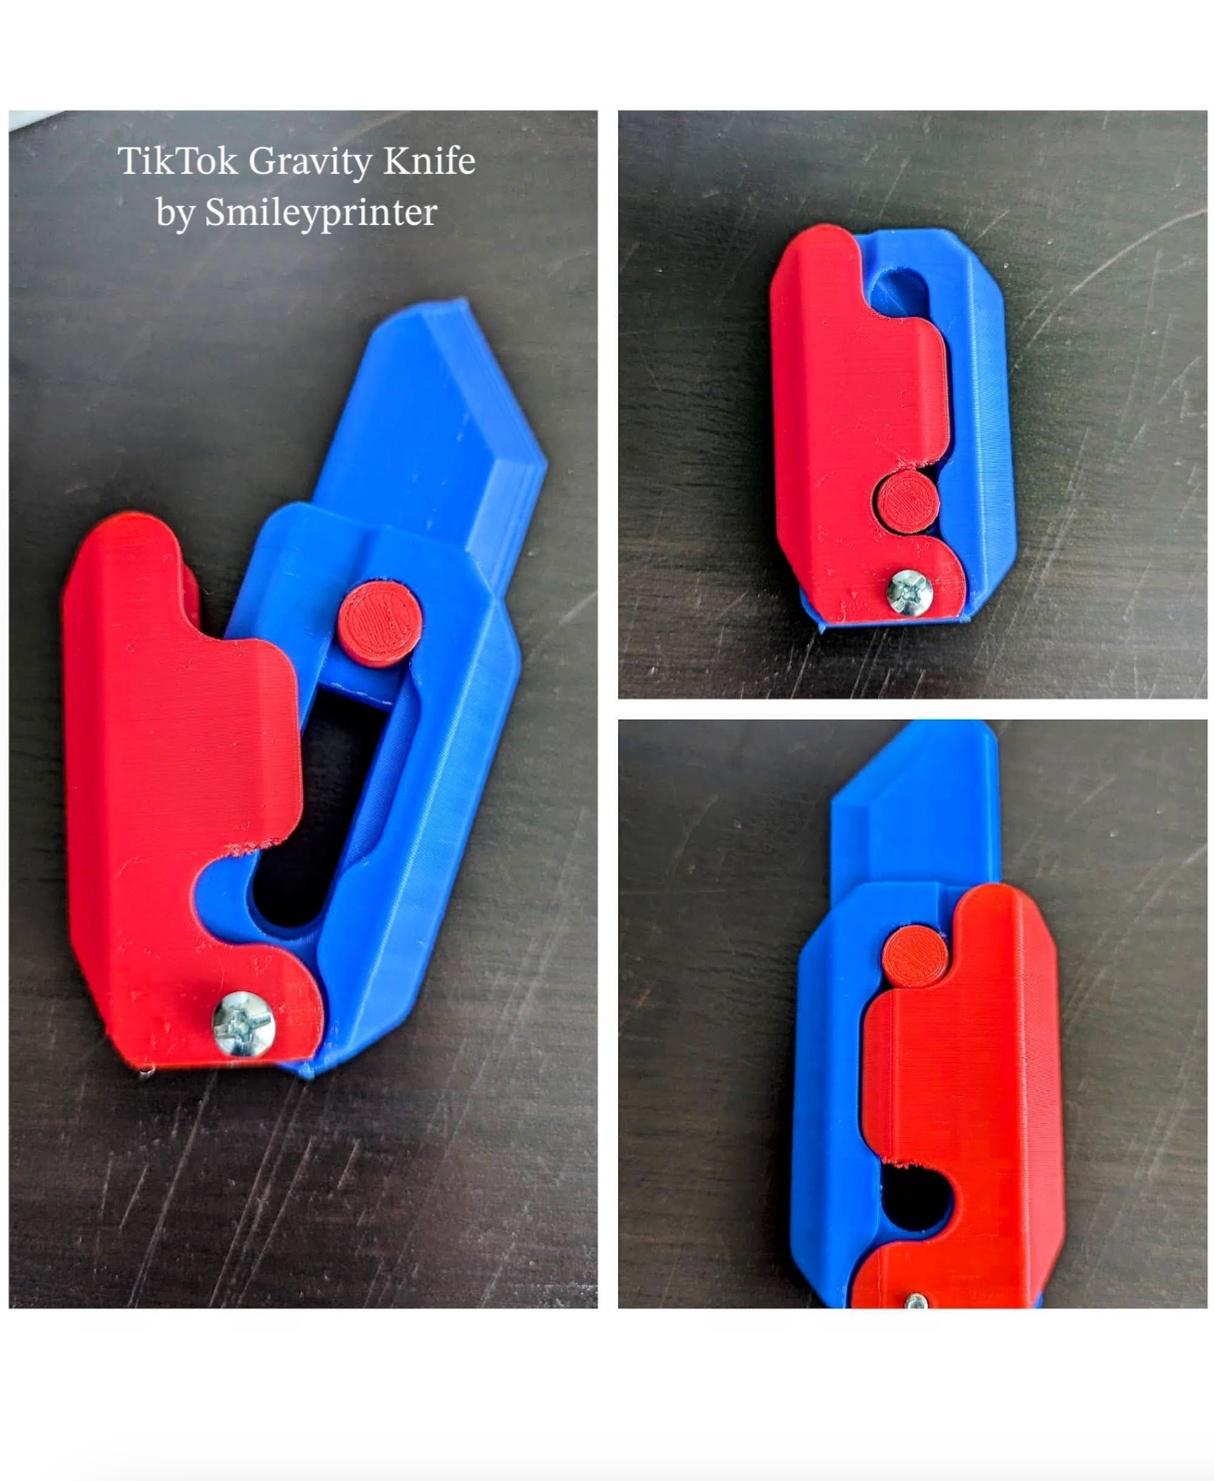 TikTok Gravity Knife Fidget Toy - Aite, this is pretty cool 😎 - 3d model